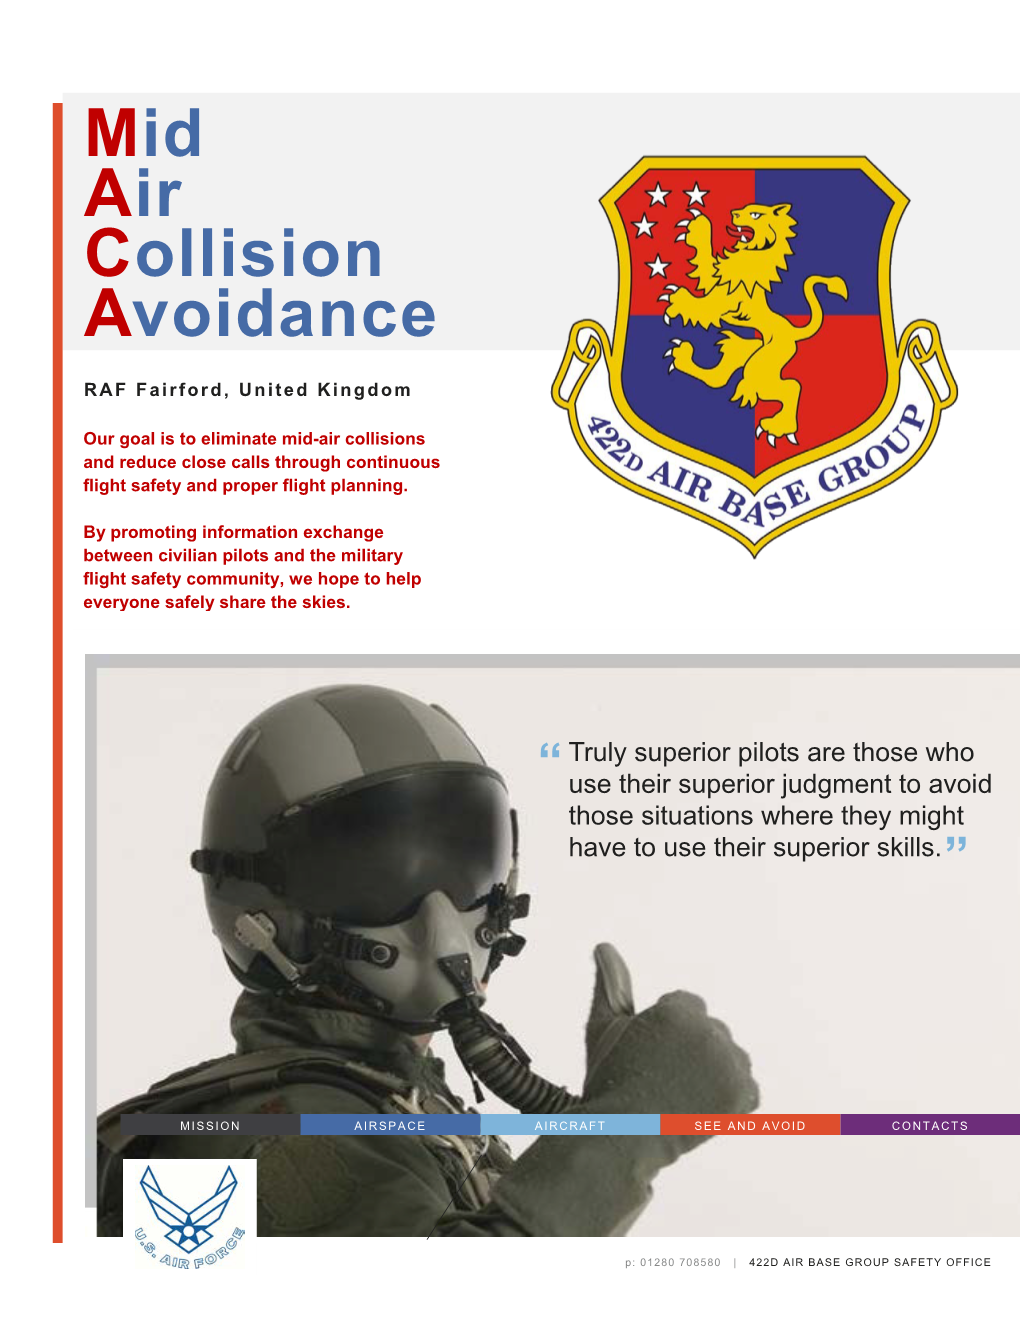 Mid Air Collision Avoidance